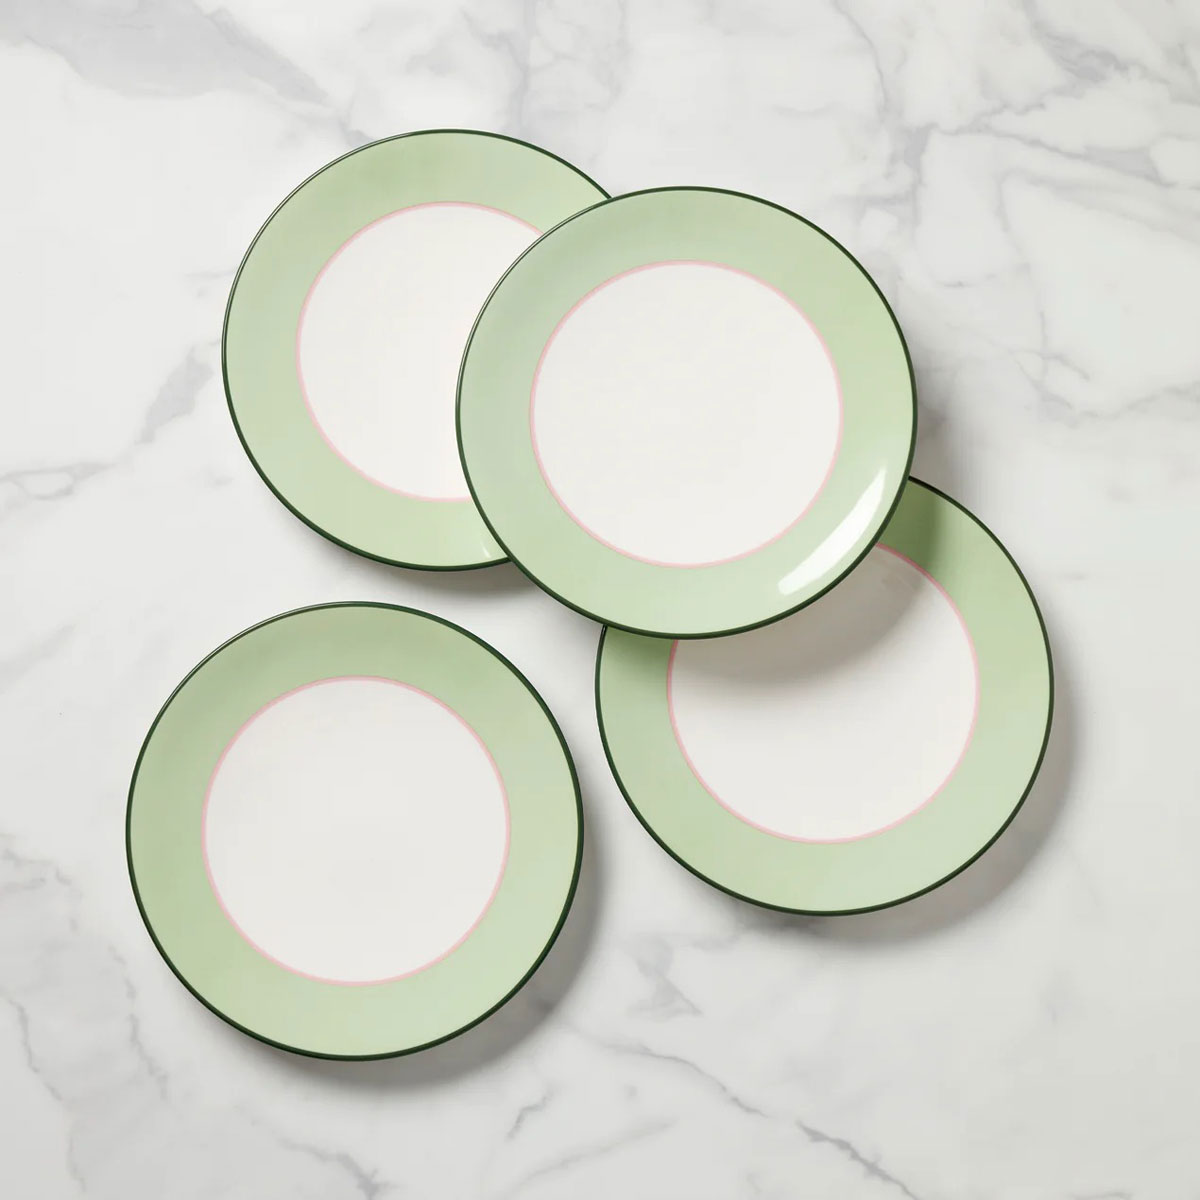 Kate Spade, Lenox Make It Pop Dinner Plate Set of 4 Green, Pink